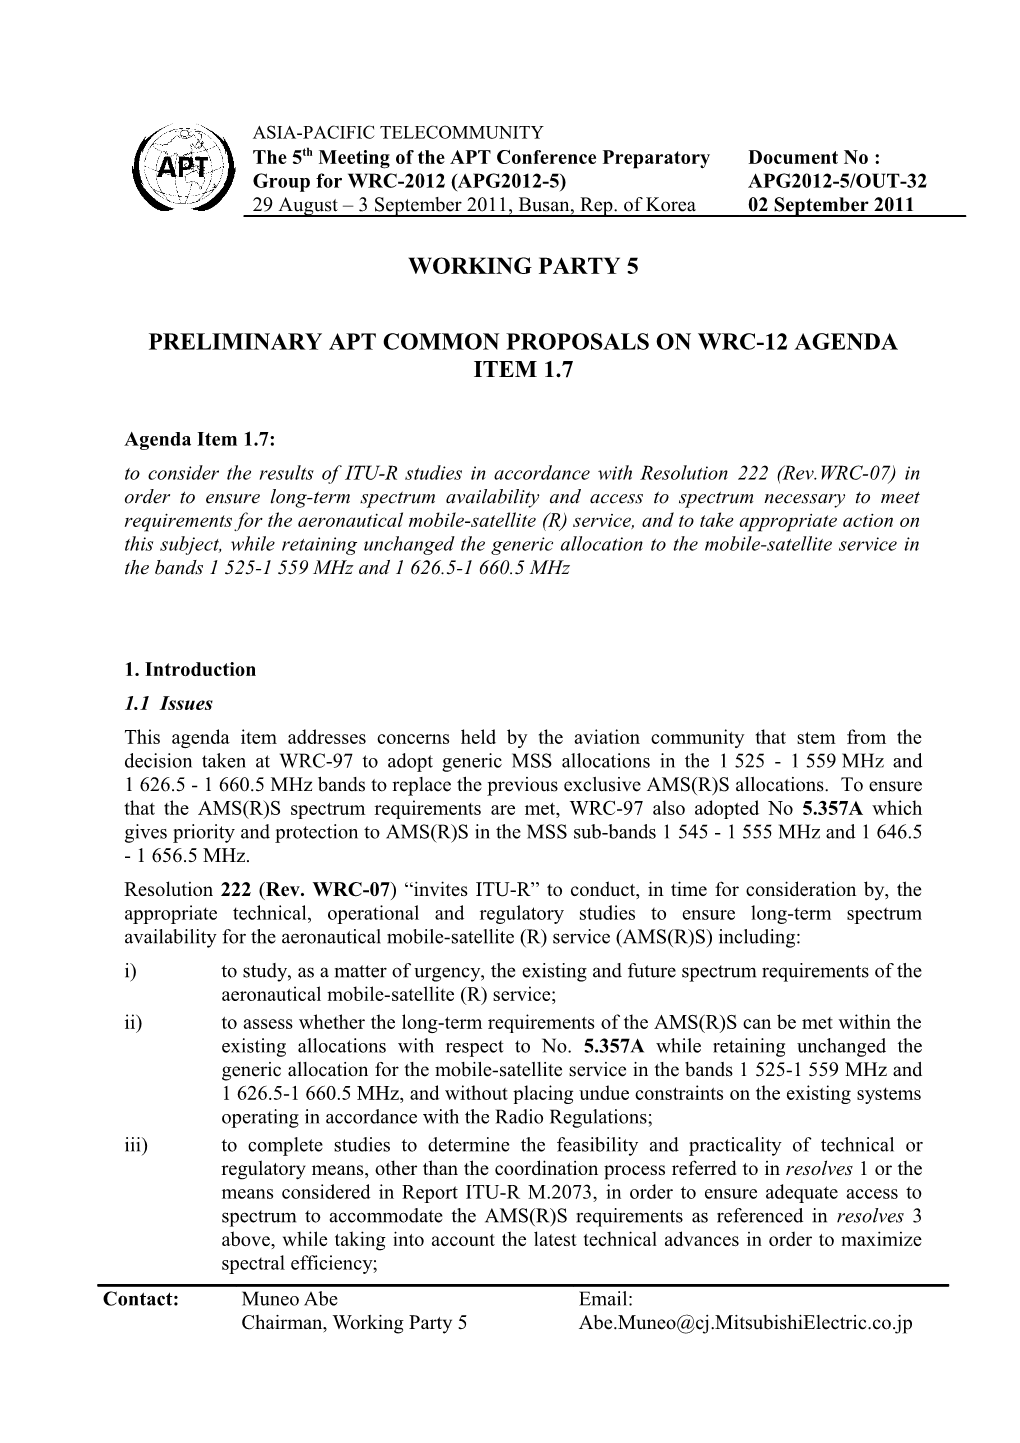 Preliminary APT Common Proposals on WRC-12 Agenda Item 1.7